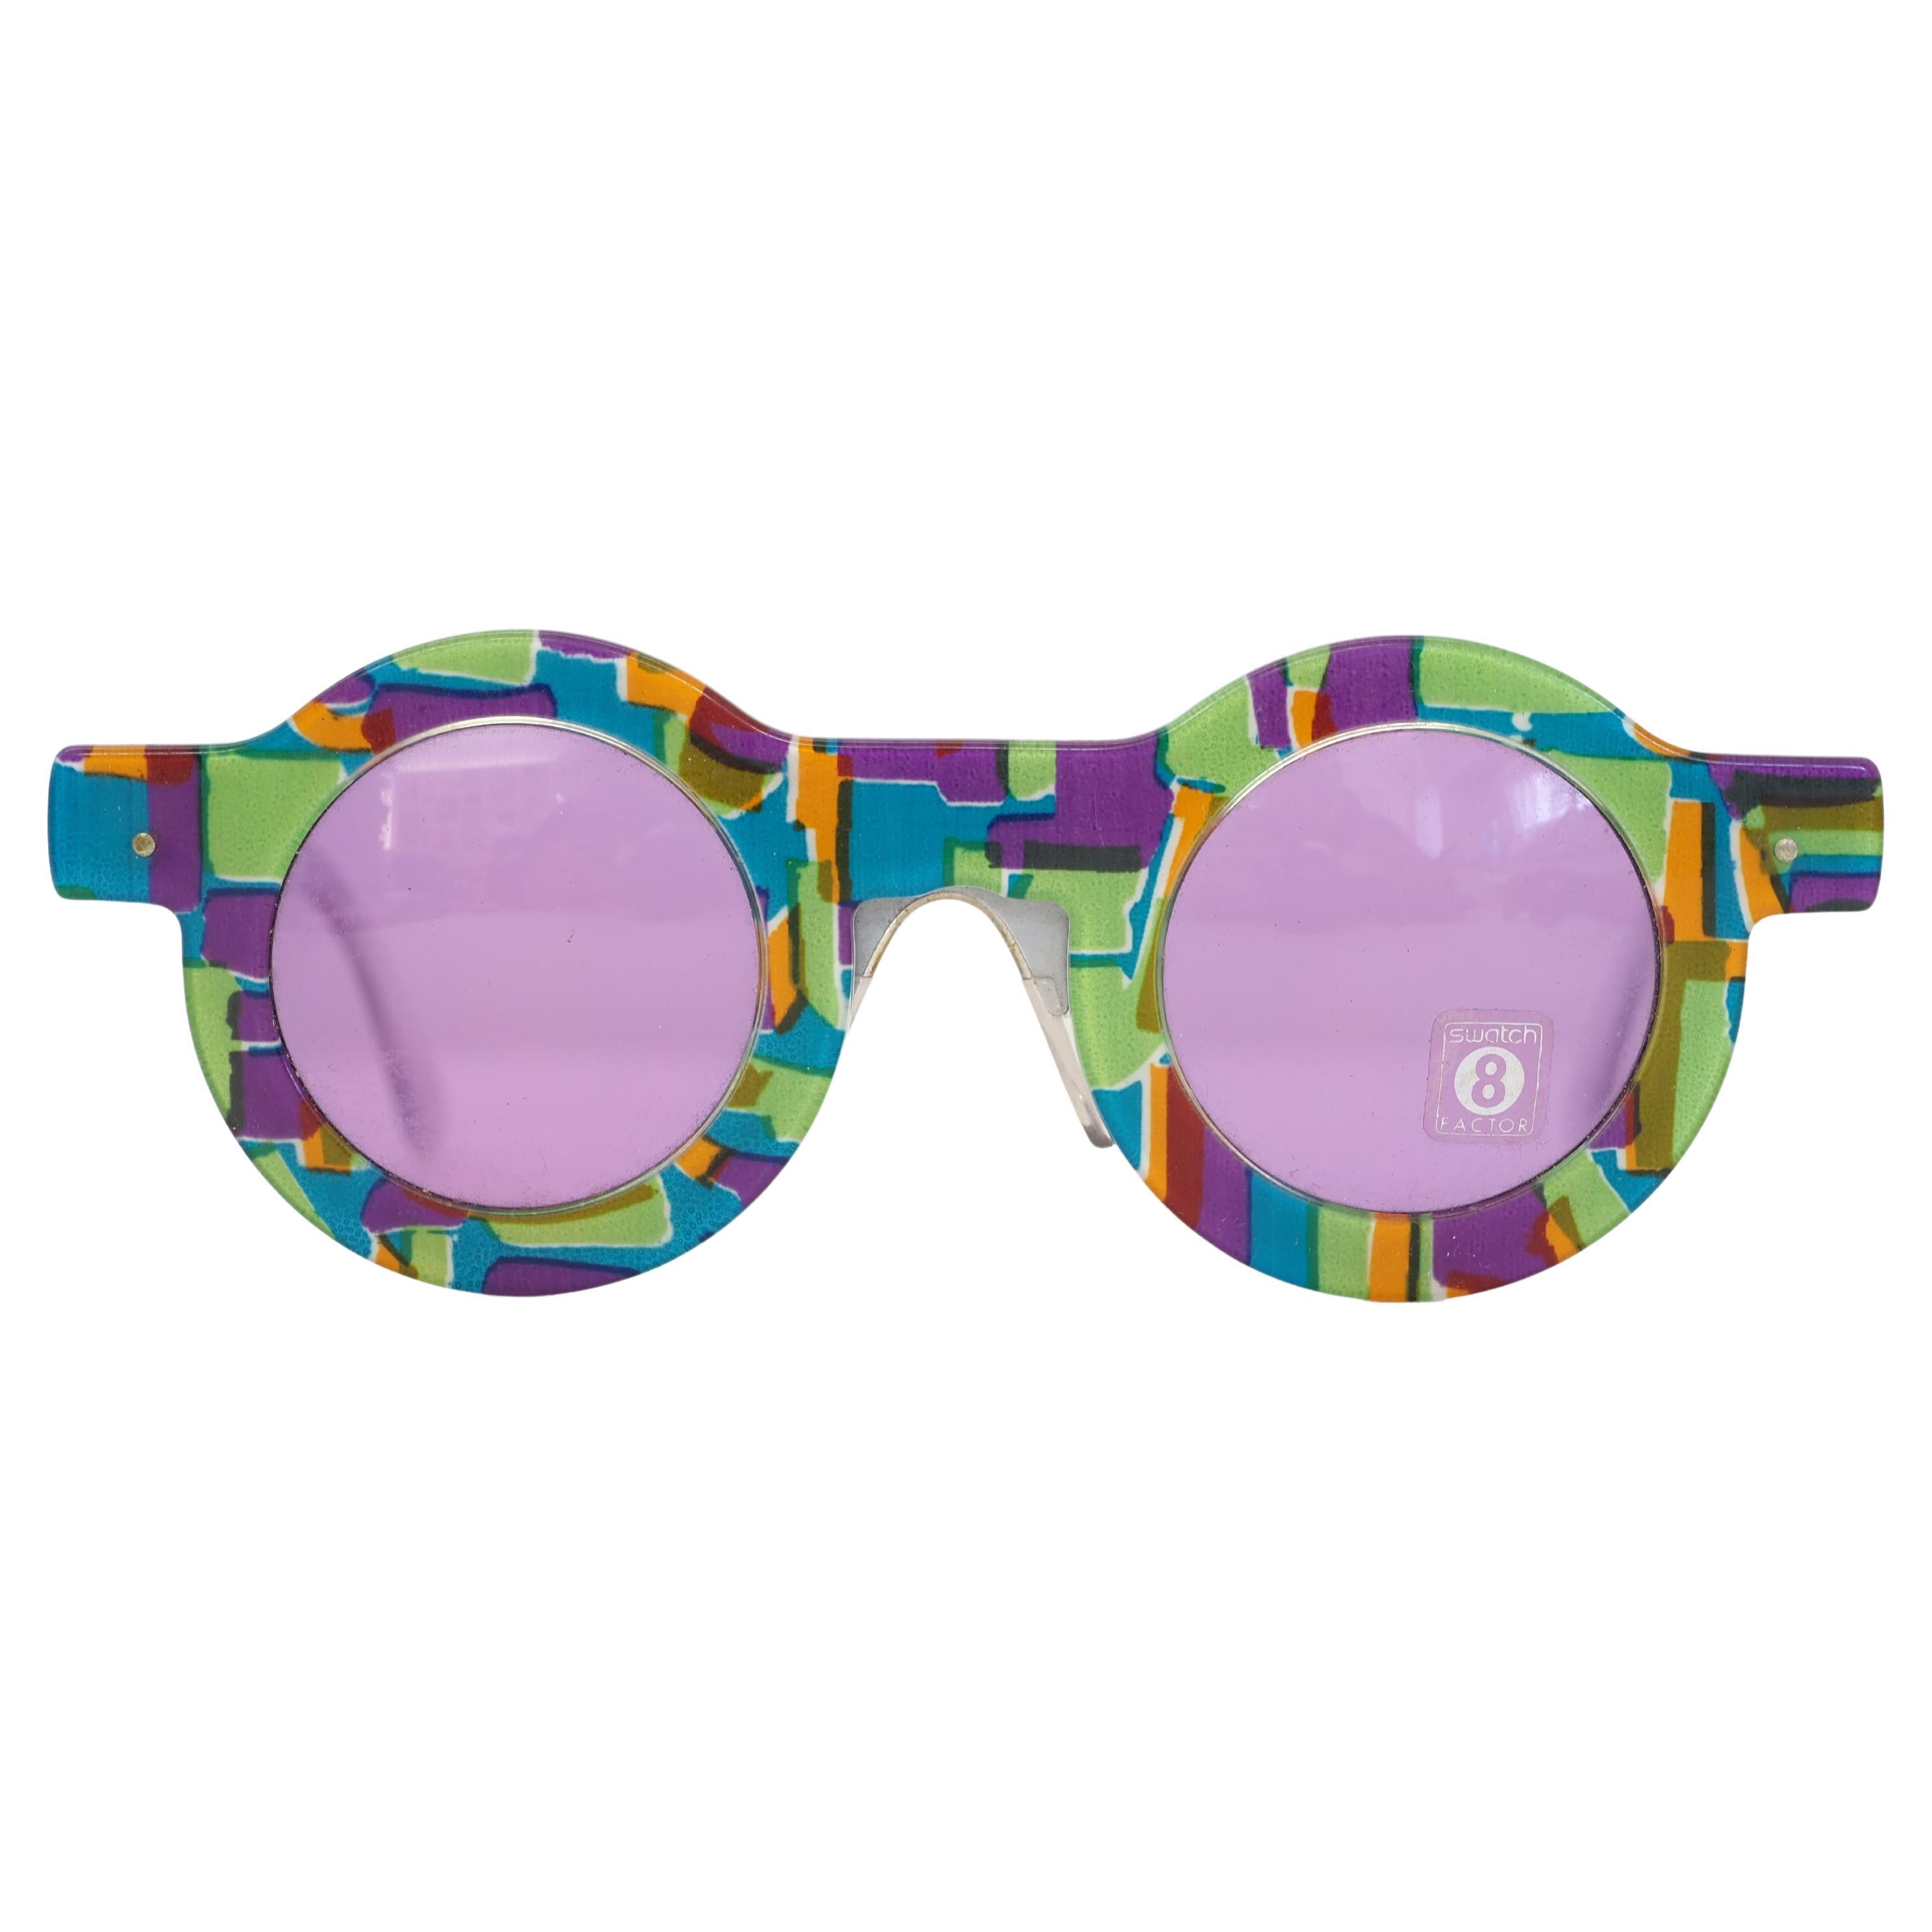 Swatch multicoloured multilens sunglasses For Sale